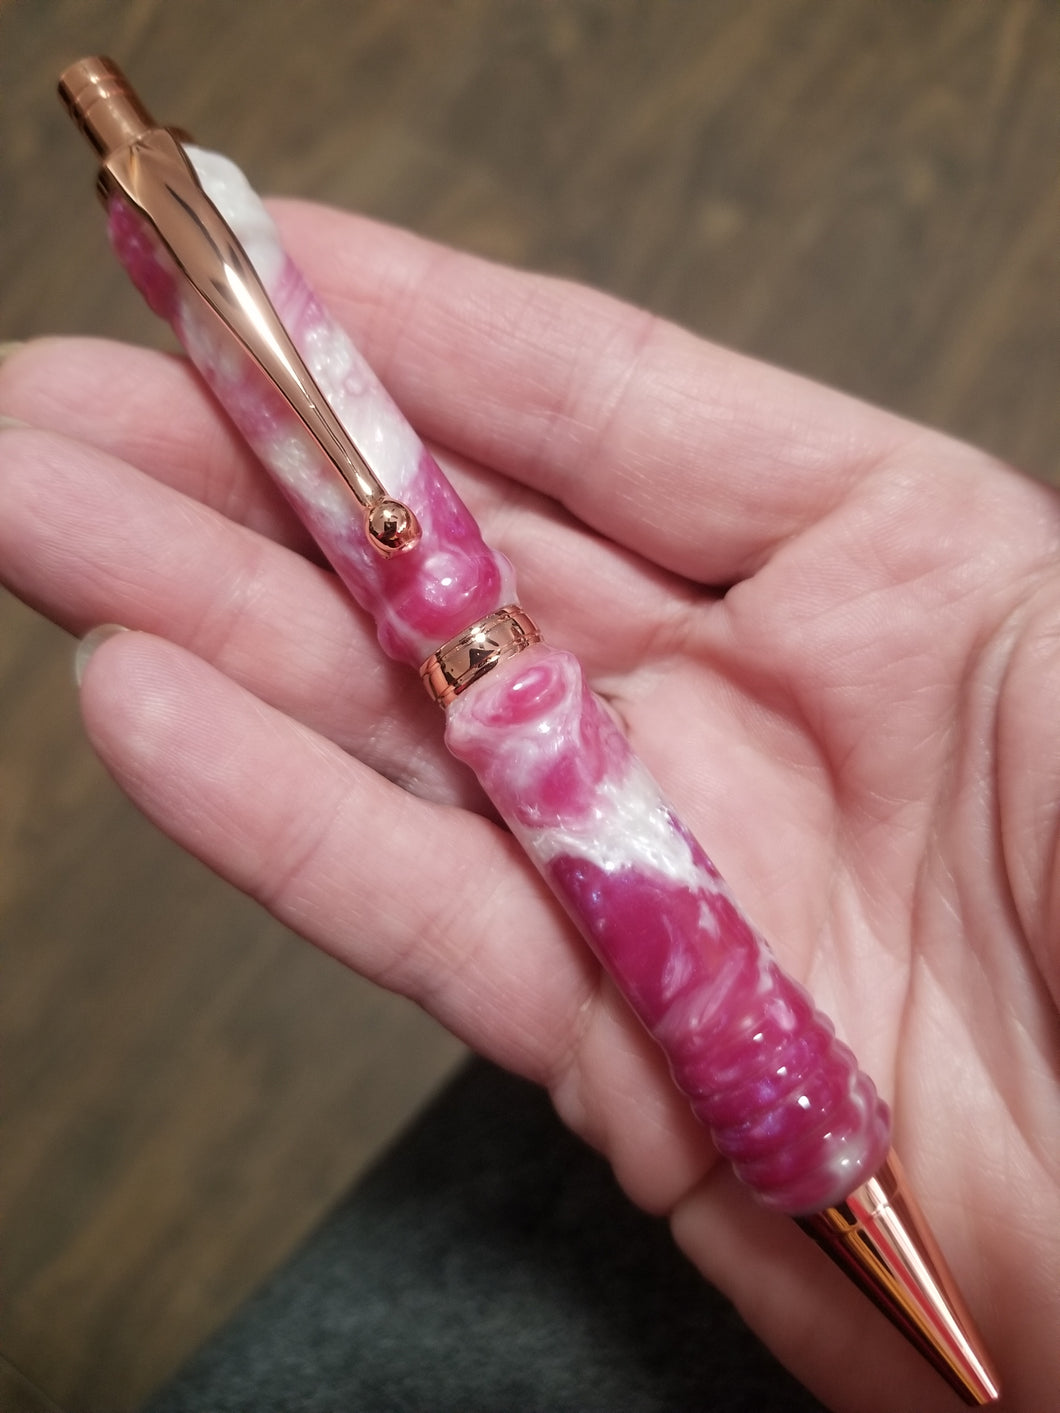 Raspberry Frosting writing pen